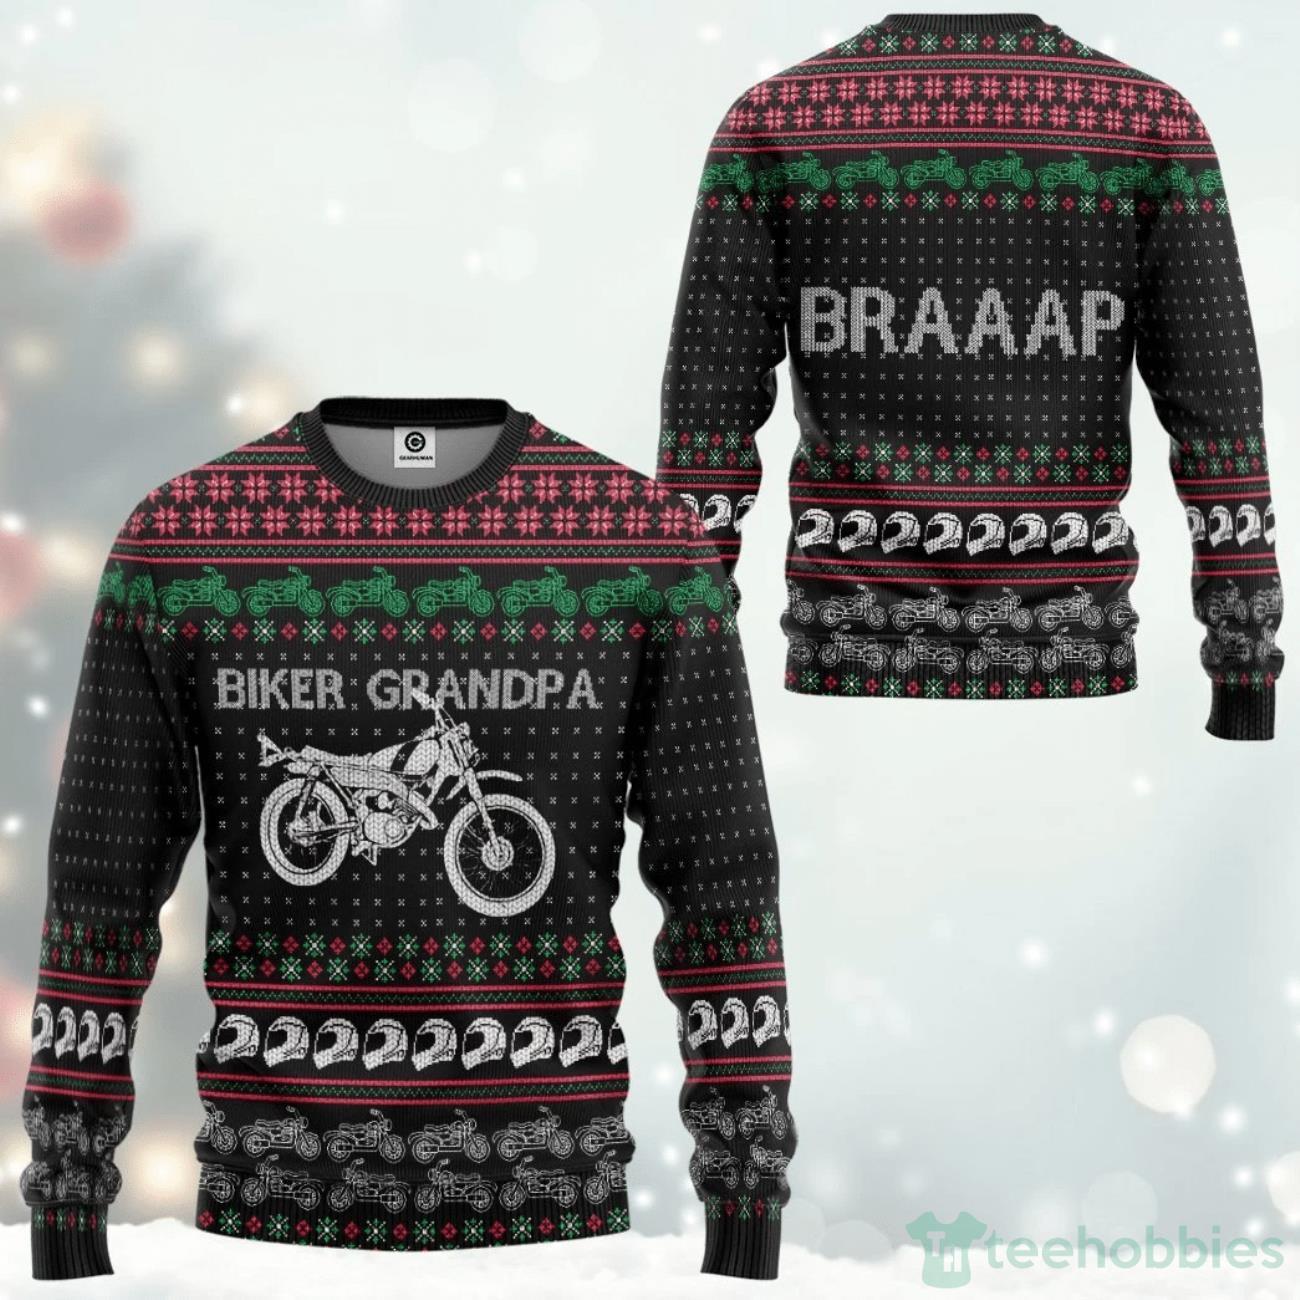 Biker Grandpa Braaap Ugly Sweater For Christmas Product Photo 1